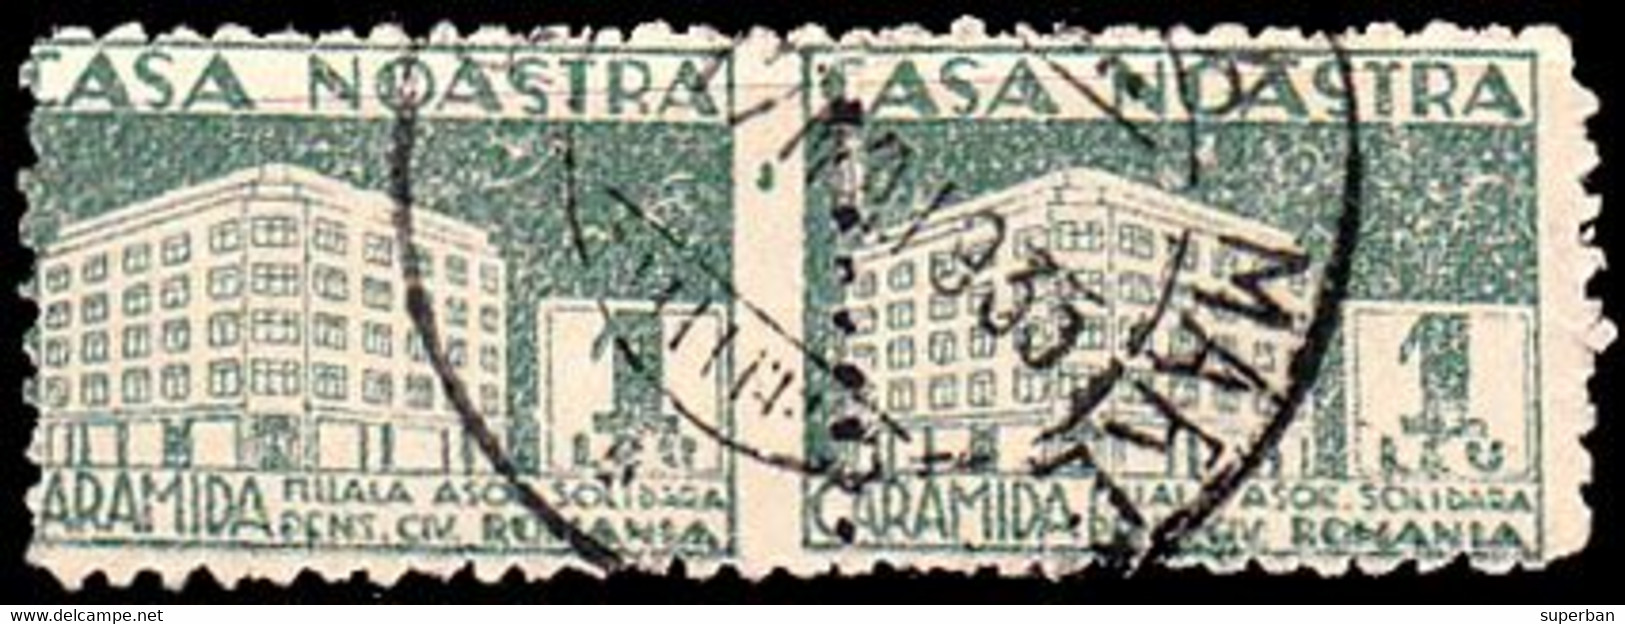 ROUMANIE / ROMANIA - CINDERELLA / TIMBRU CARAMIDA : 1 LEU - CASA NOASTRA - FUND RAISING For RETIRED ~ 1930 - '35 (ai033) - Fiscale Zegels